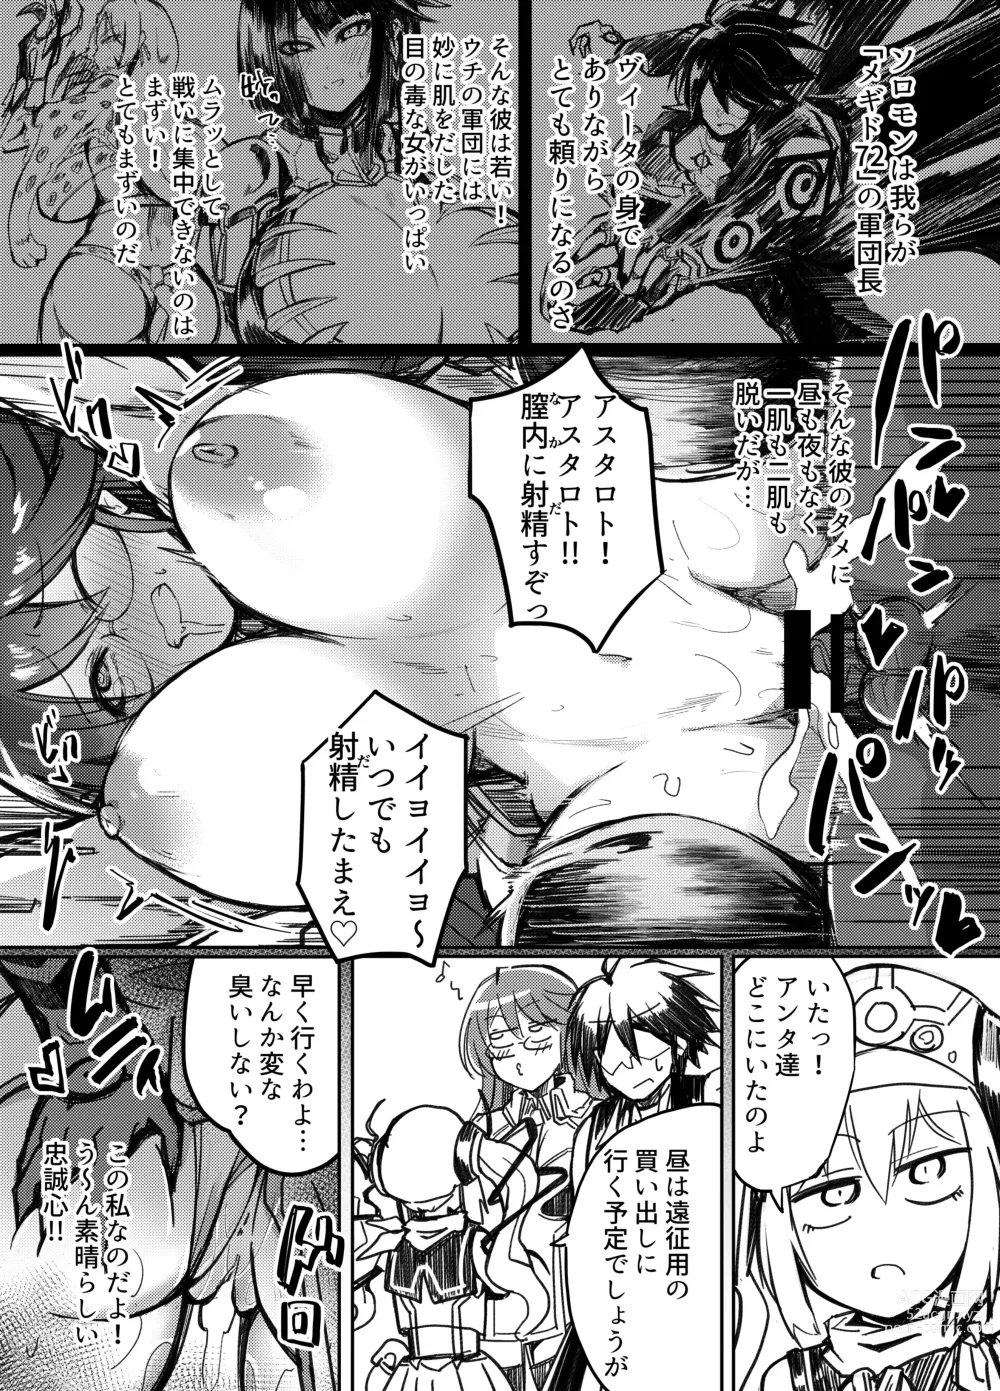 Page 5 of doujinshi Askos H